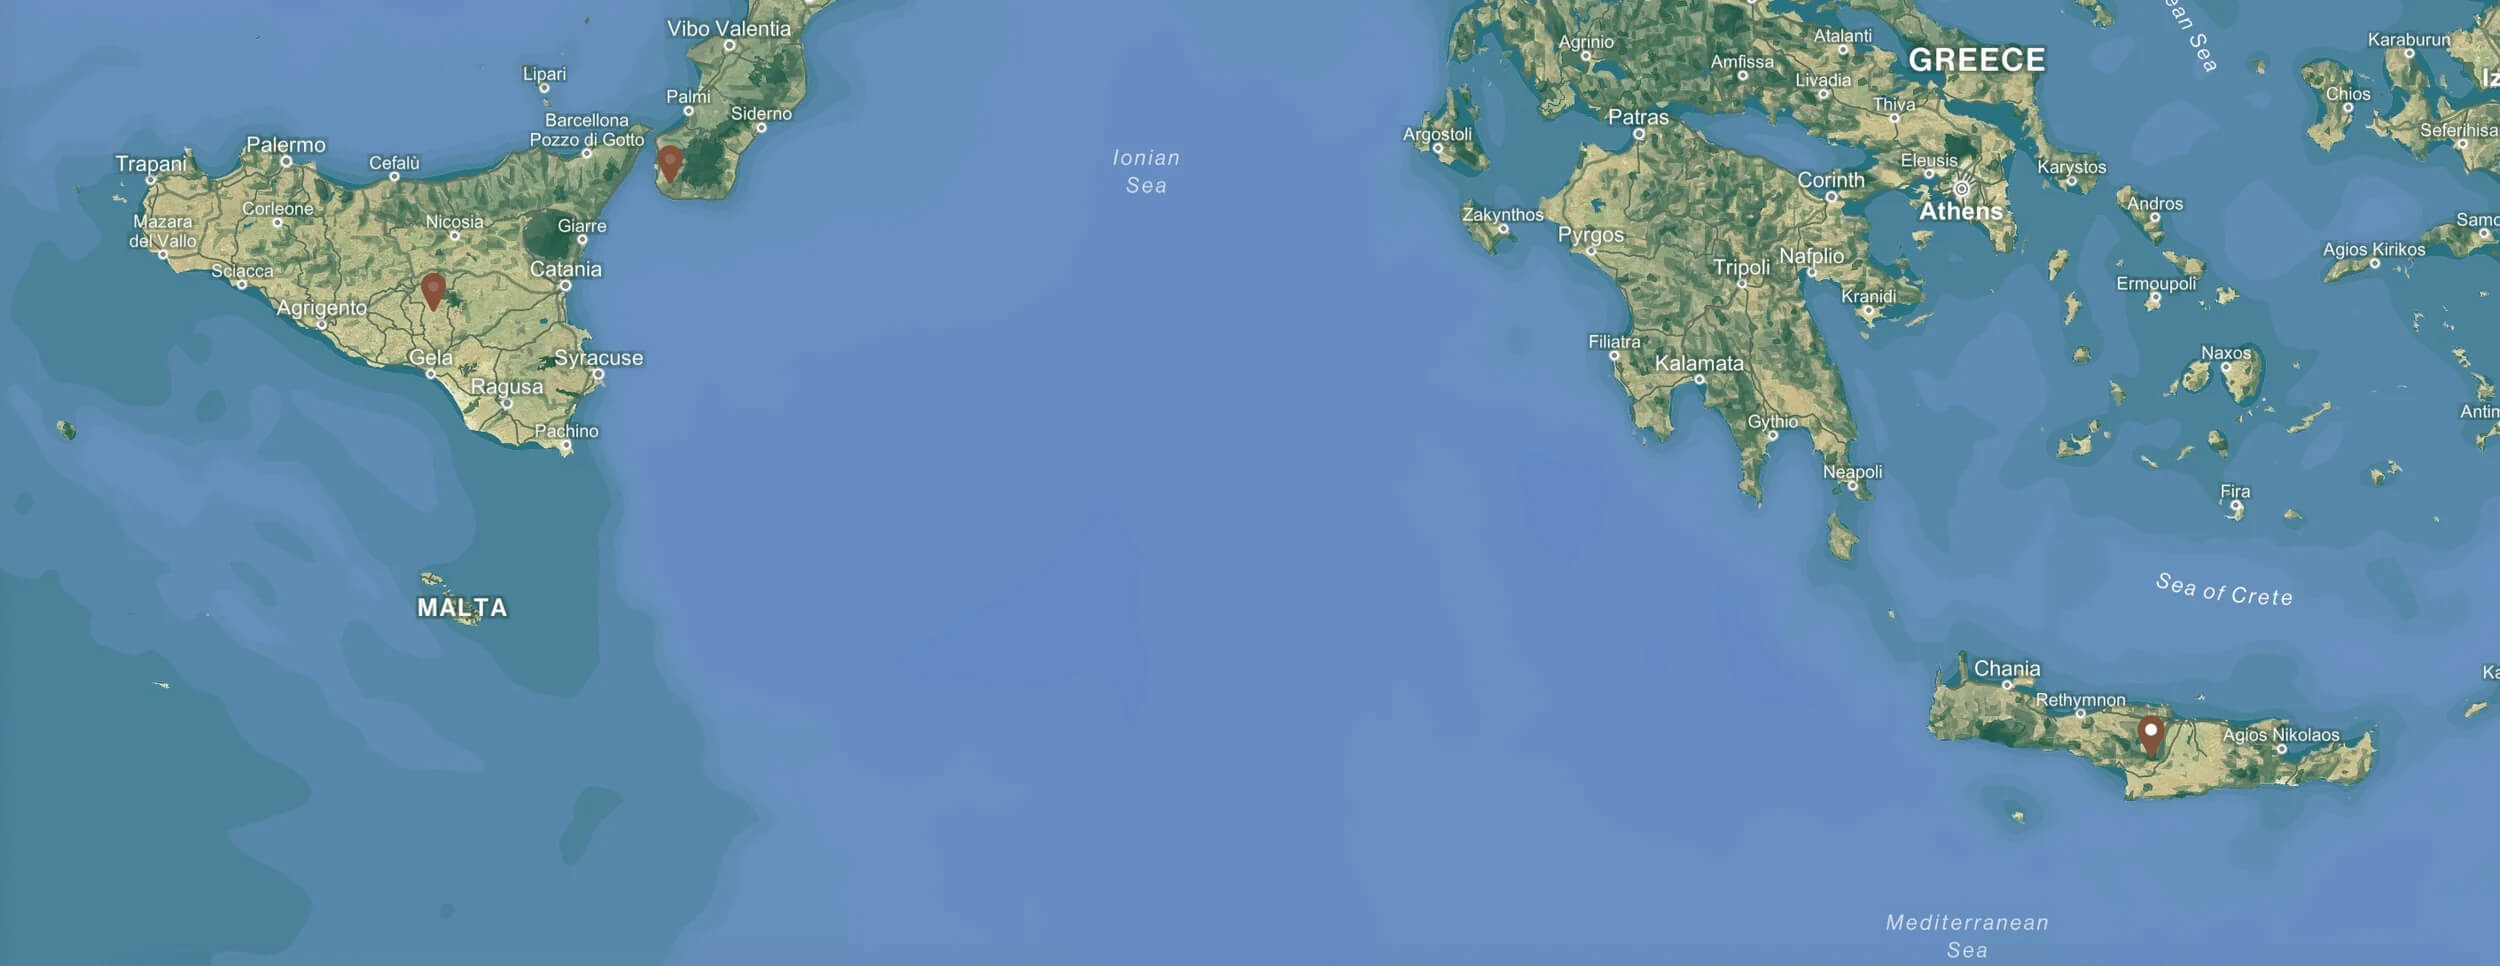 Greece background map desktop